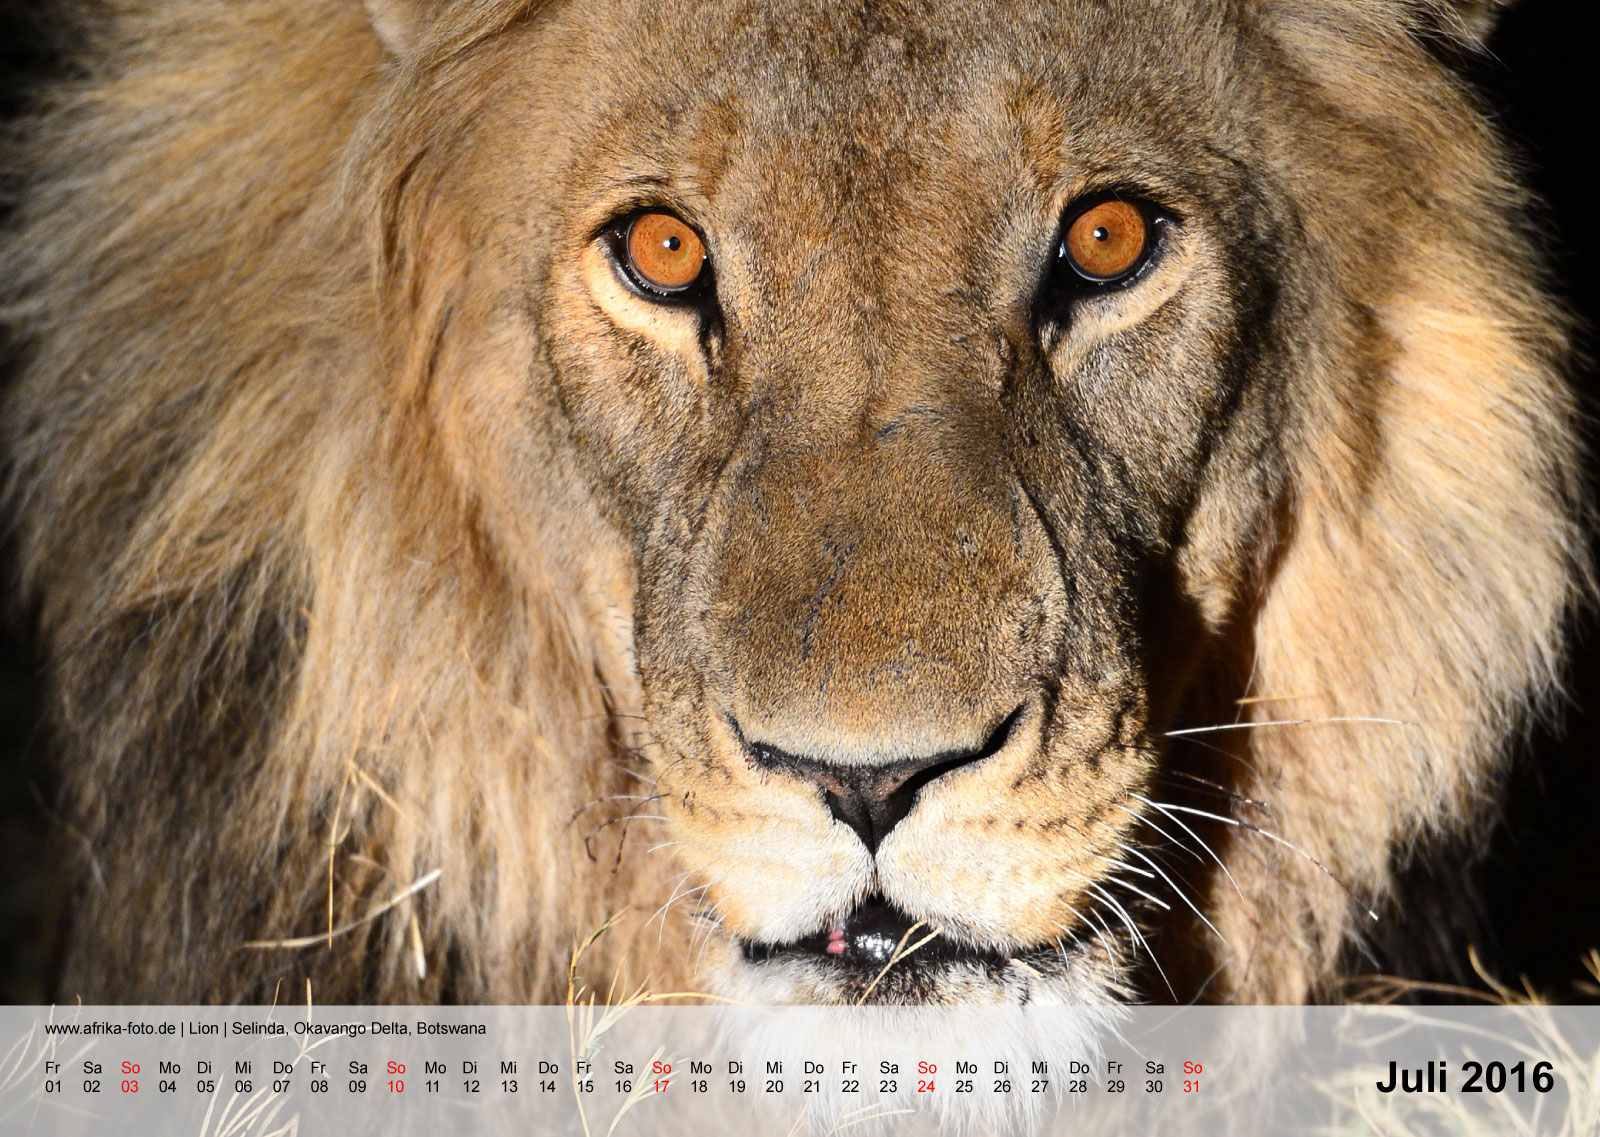 Löwe | Lion | Selinda, Okavango Delta, Botswana | Kalender 2016 - Juli